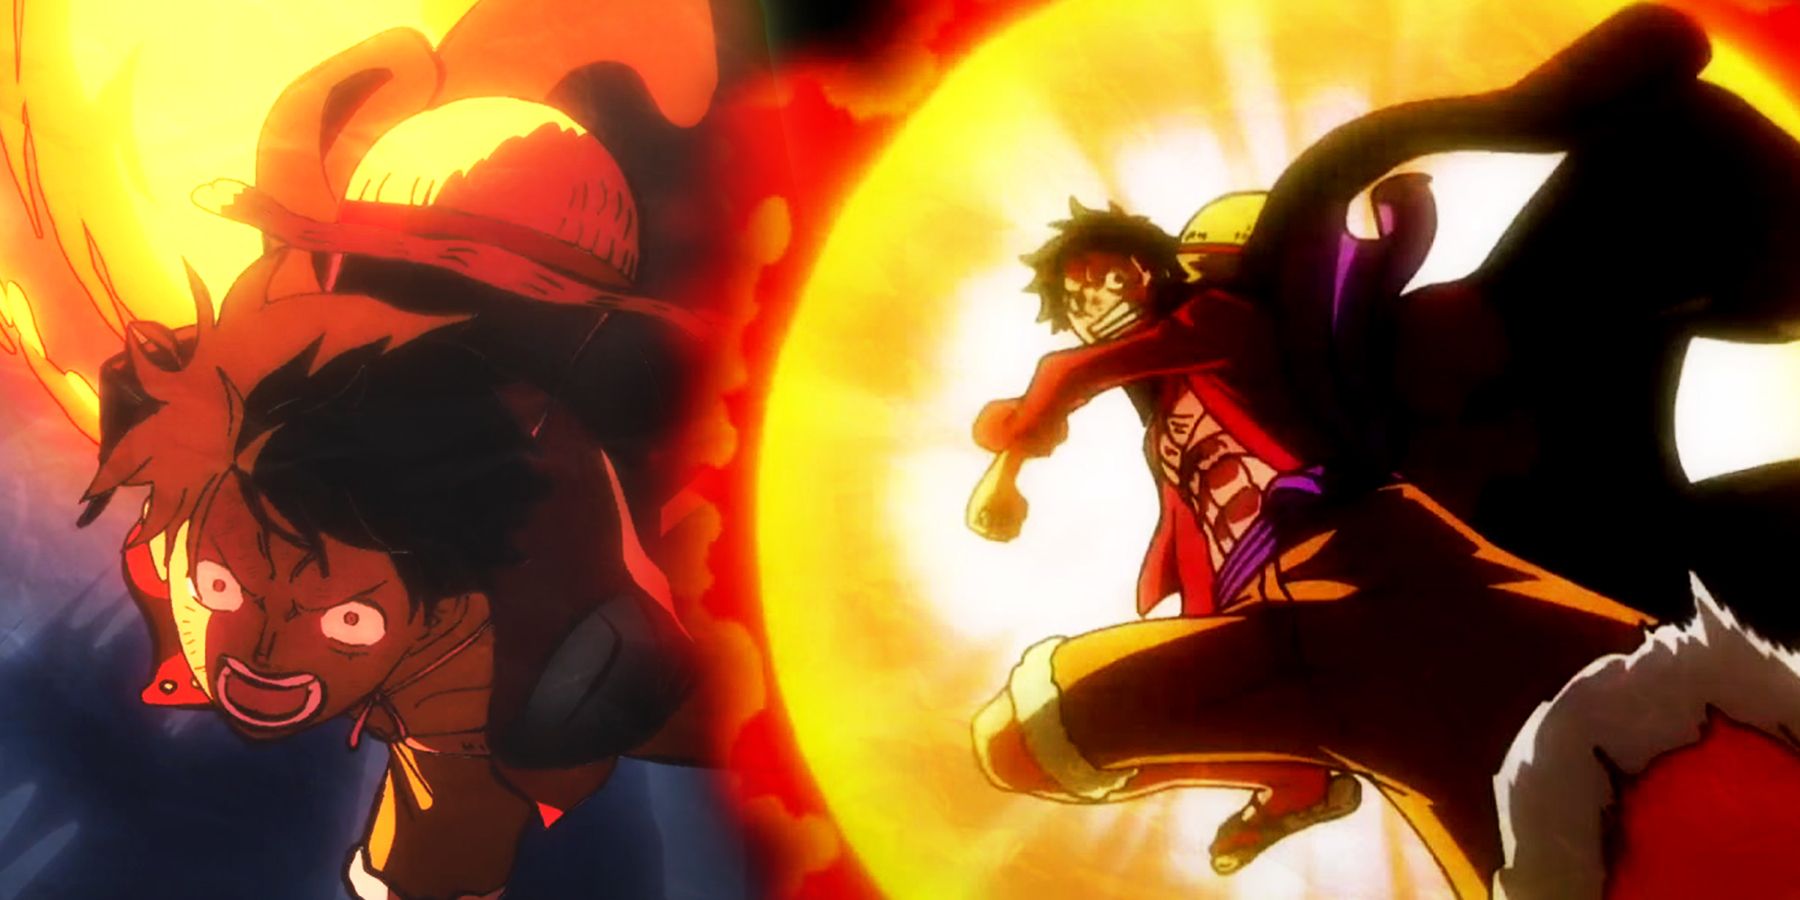 One Piece: Luffy's Sun God Awakening Manifested via Fire Powers